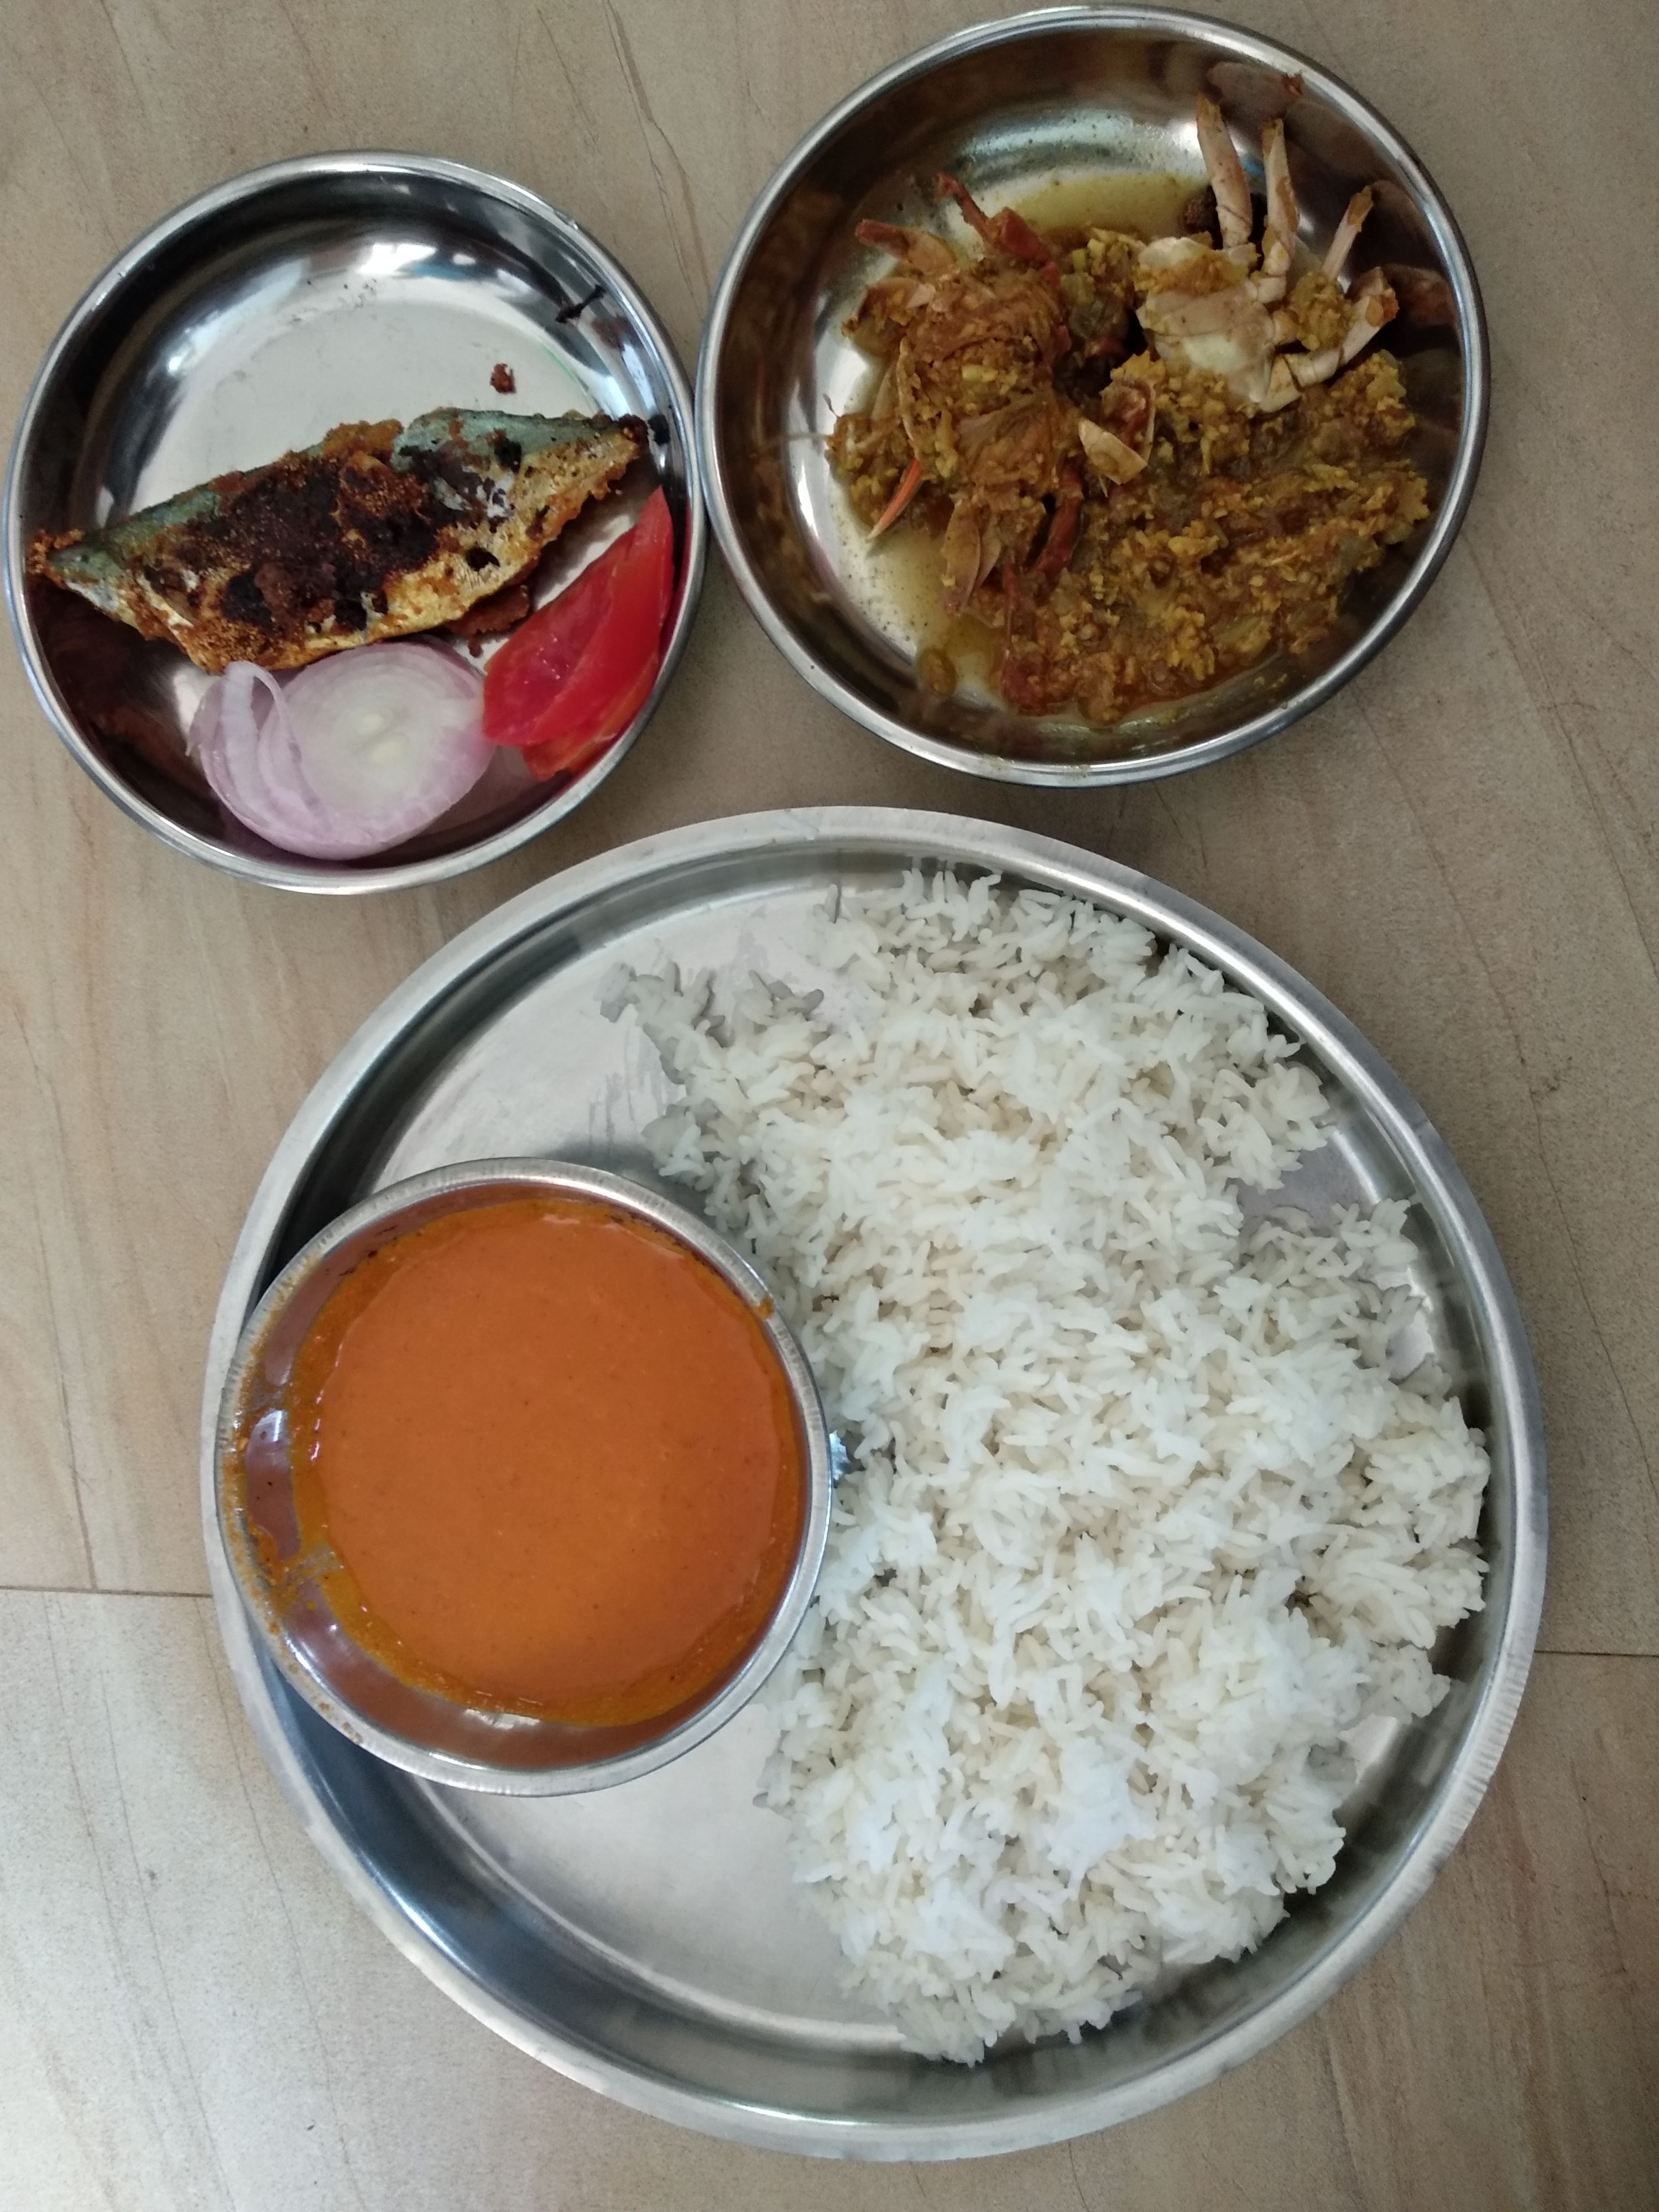 Karwar Food - Photo Credits: Chetan Naik